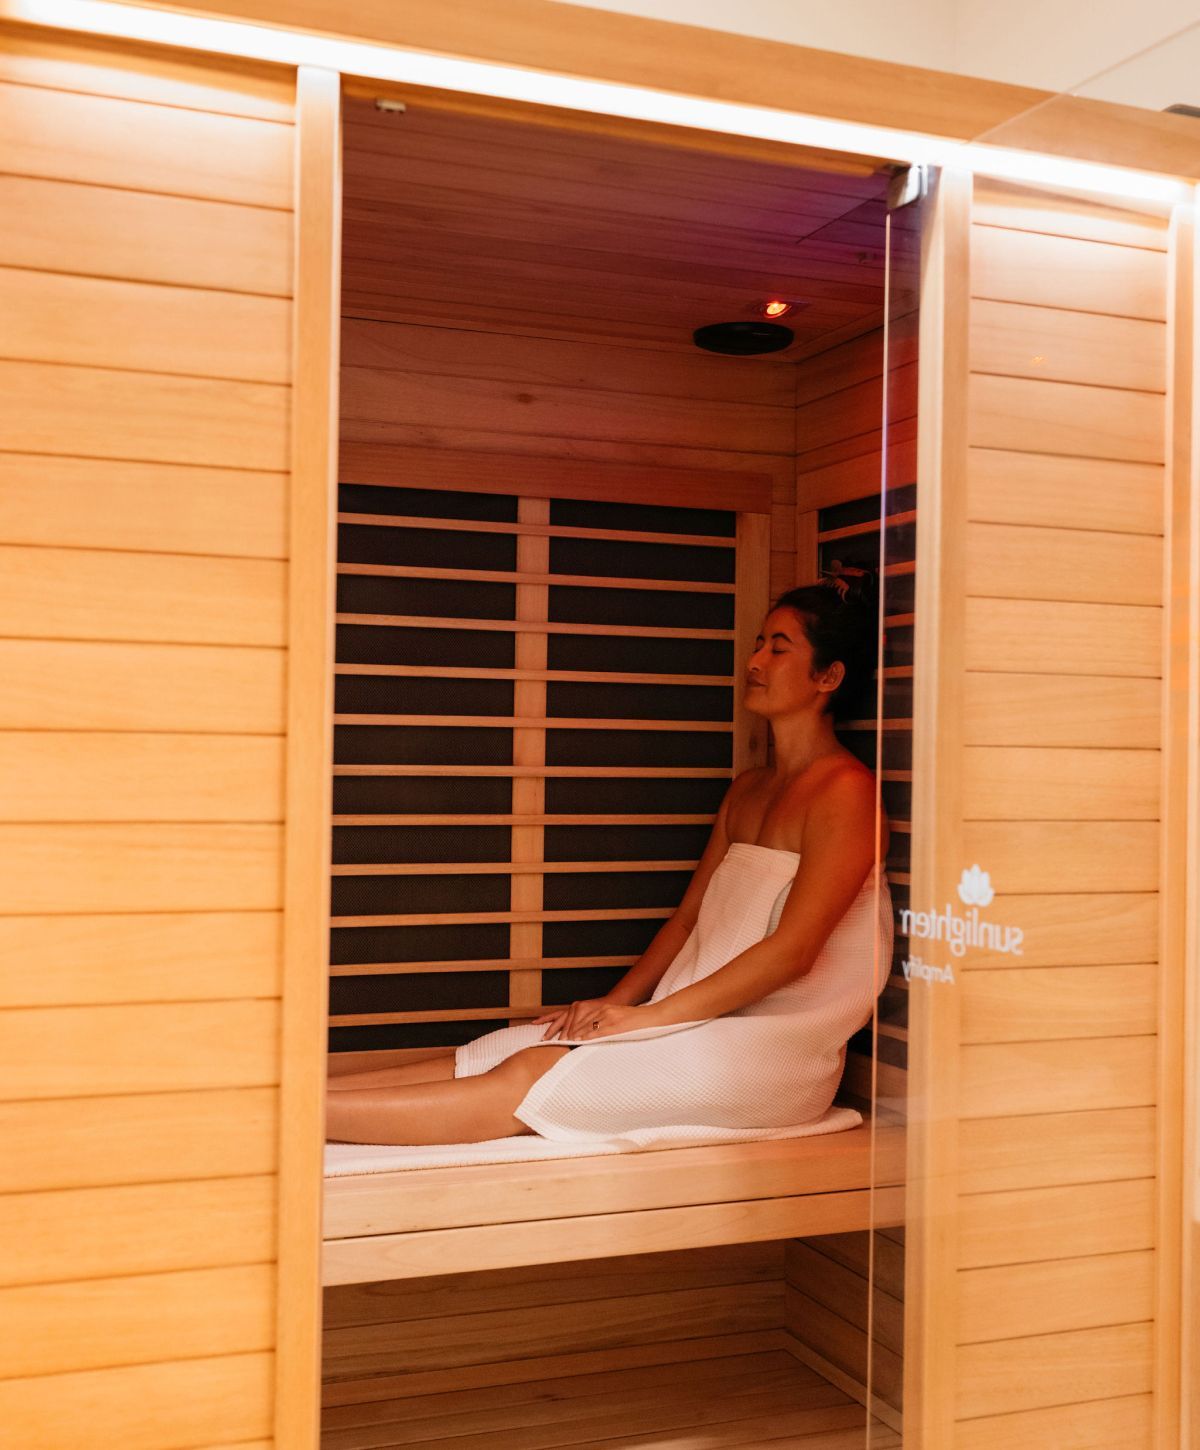 la jolla medical spa model in sauna